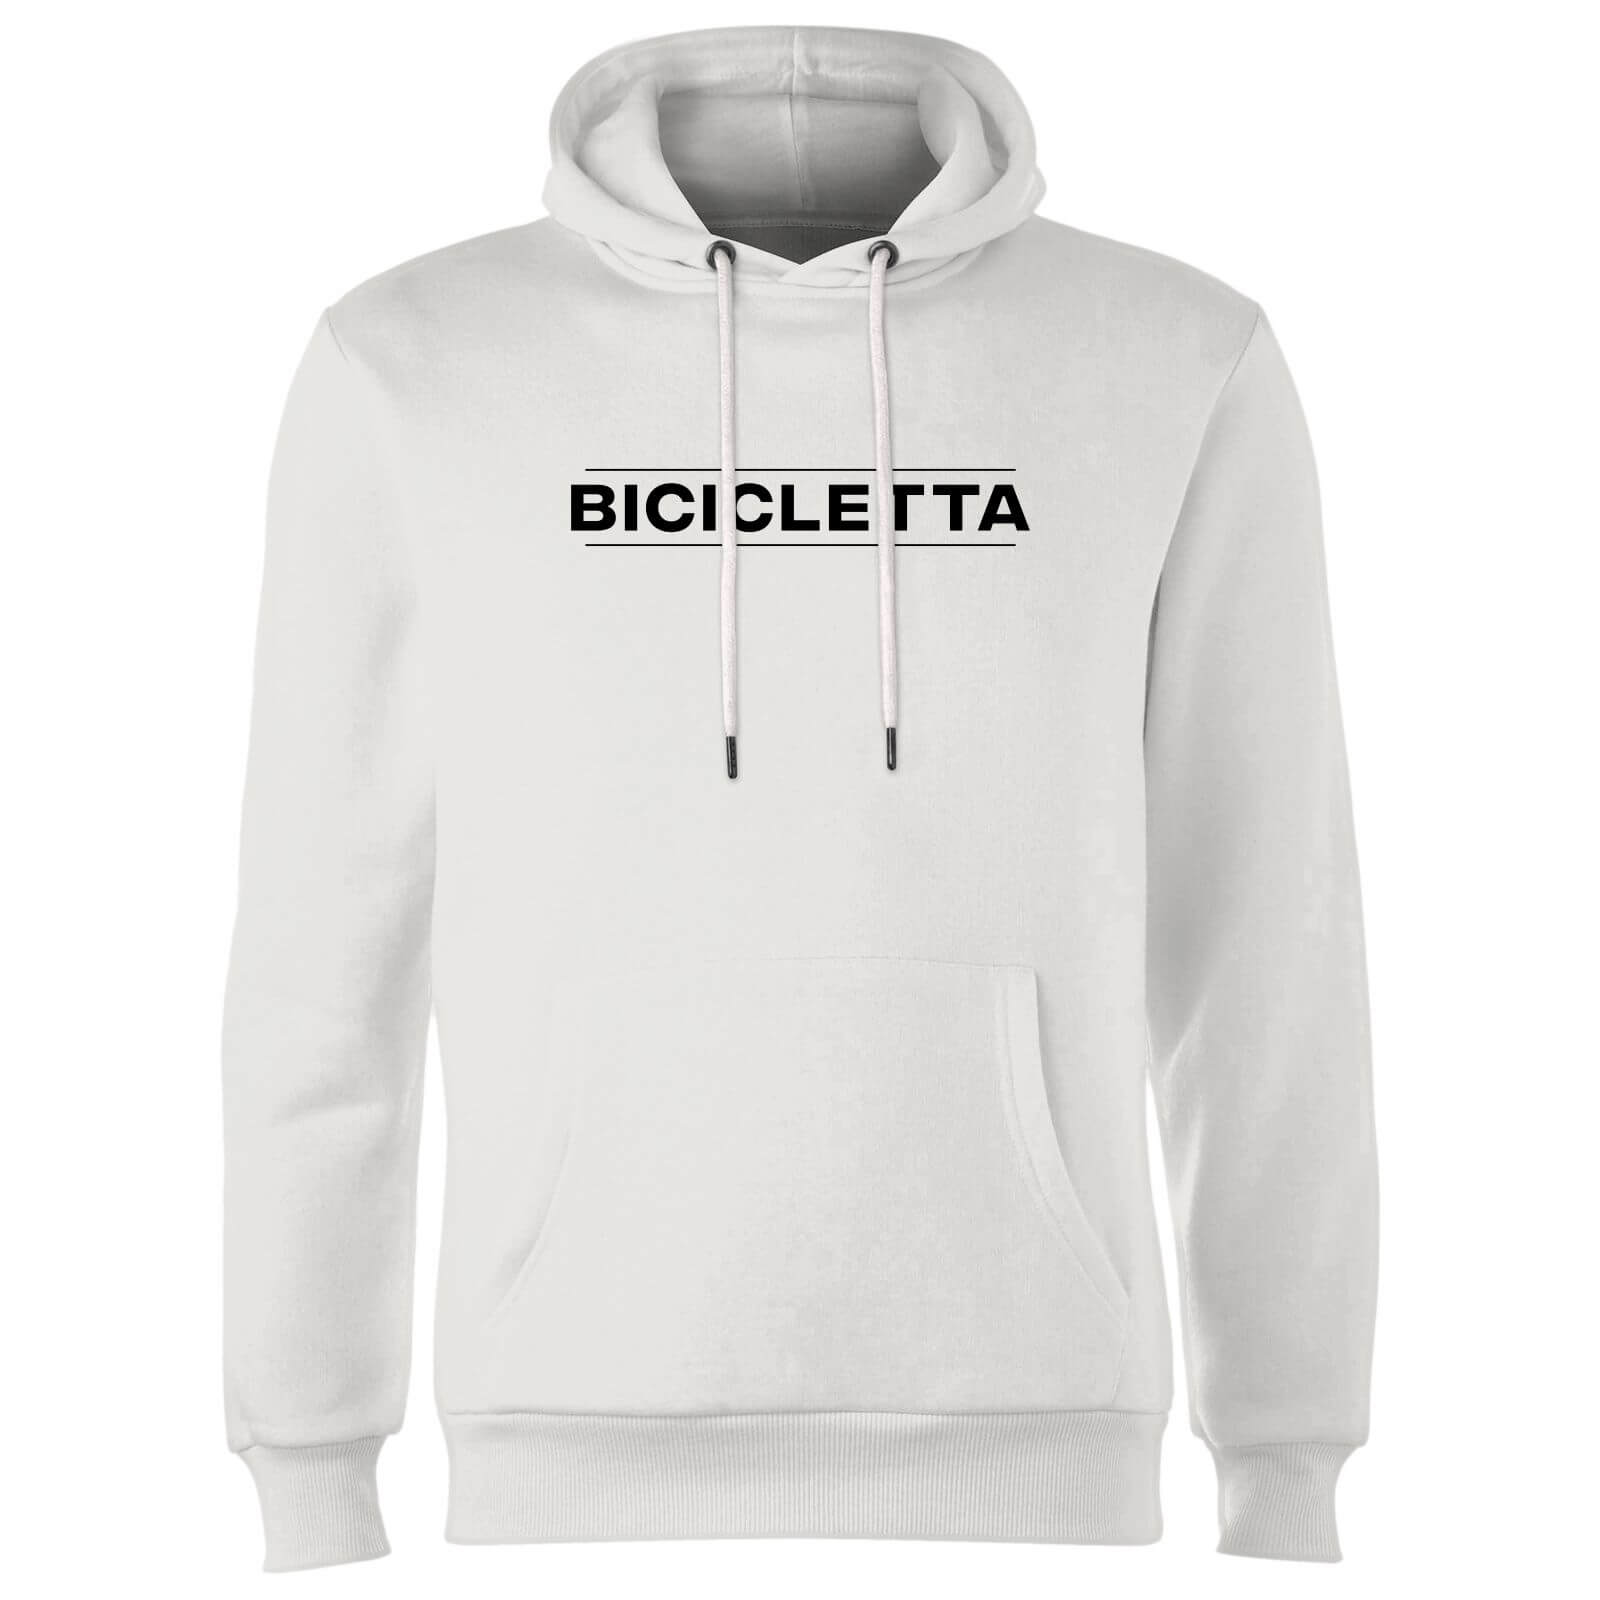 Bicicletta Hoodie - White - XL - White